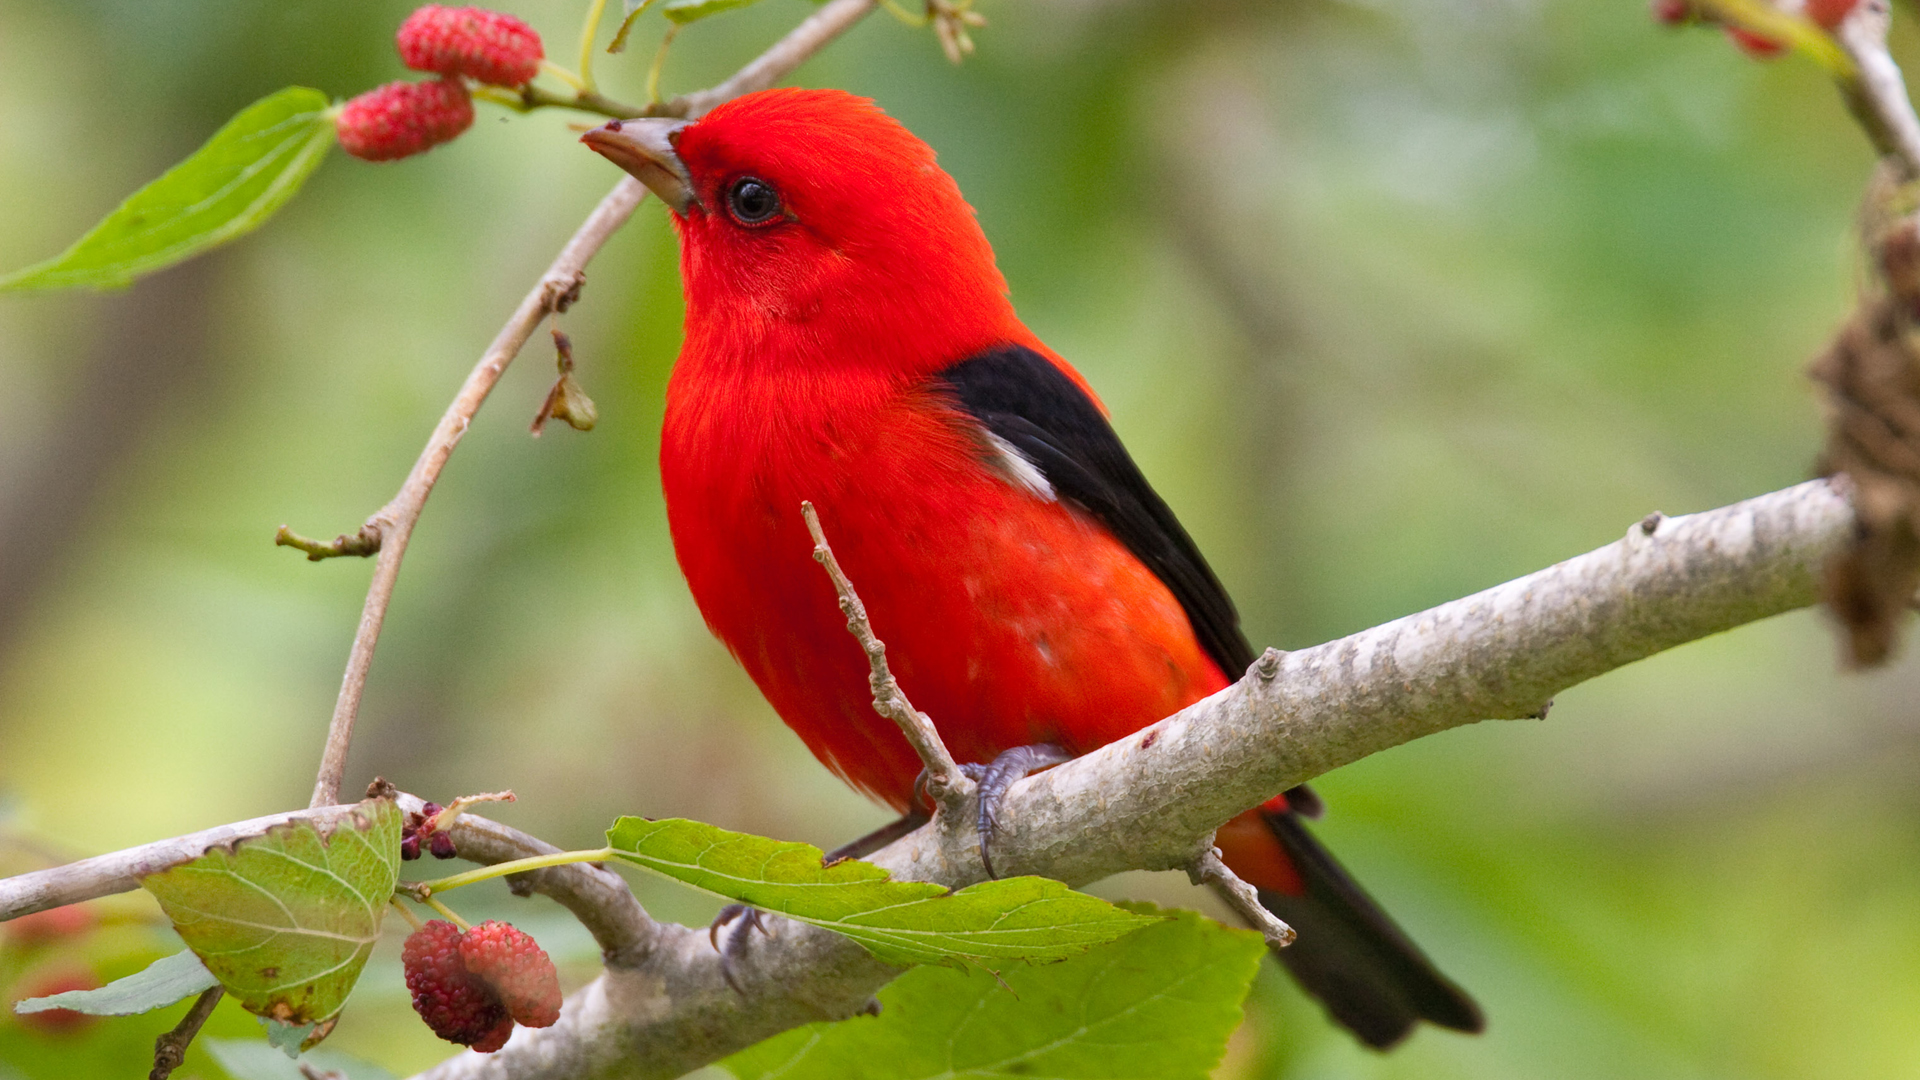 Red Black Little Bird Is Perching On Plums Tree Branch 2K Birds